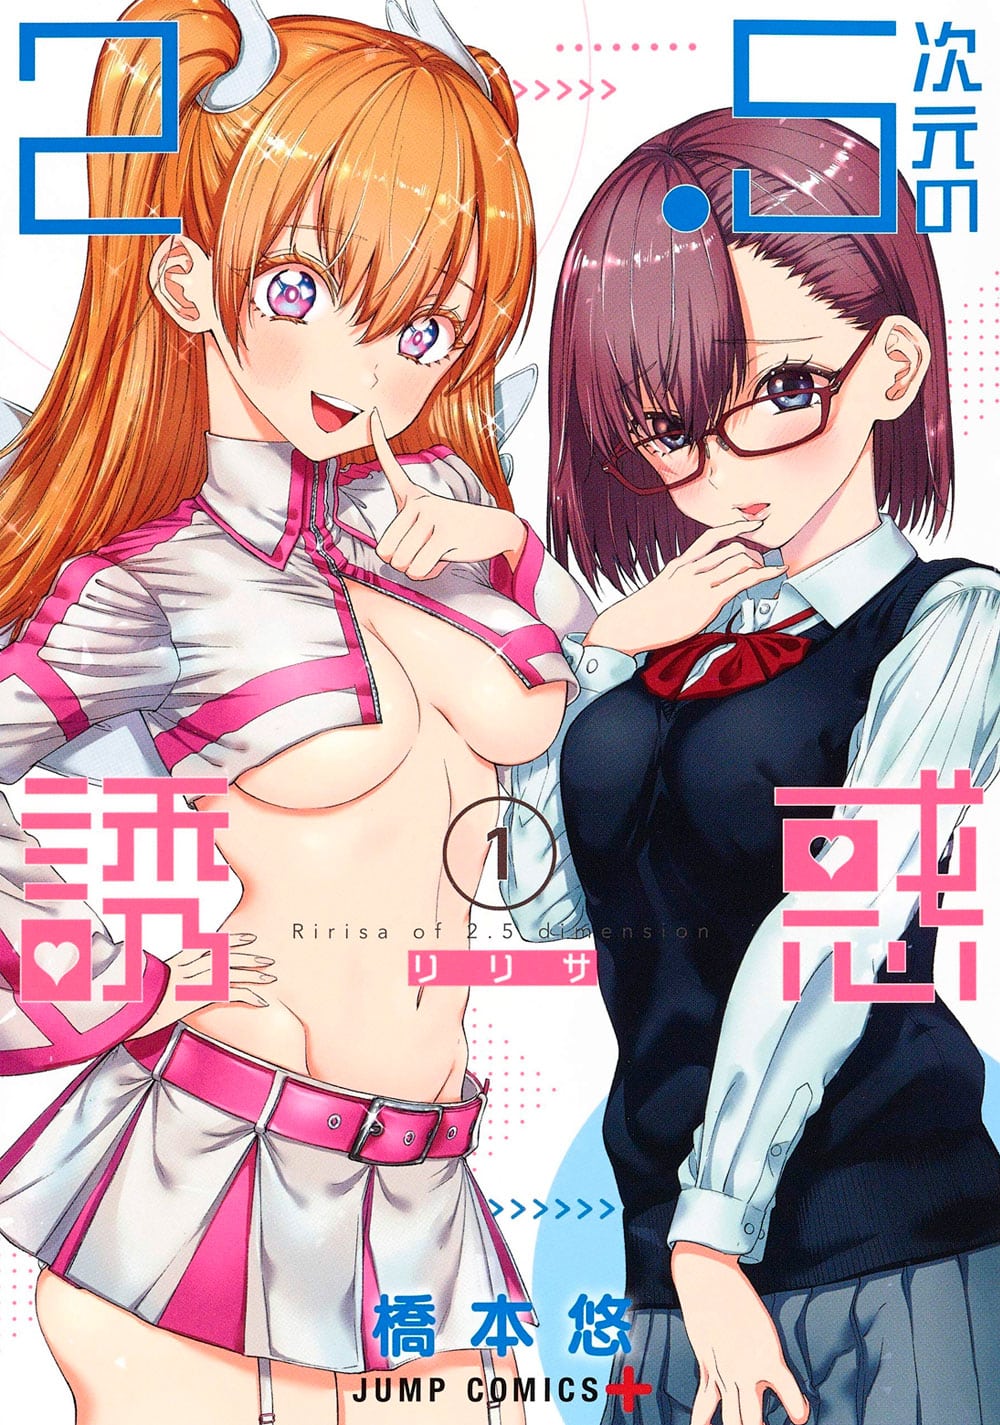 2.5-Jigen No Ririsa Manga Vol 1